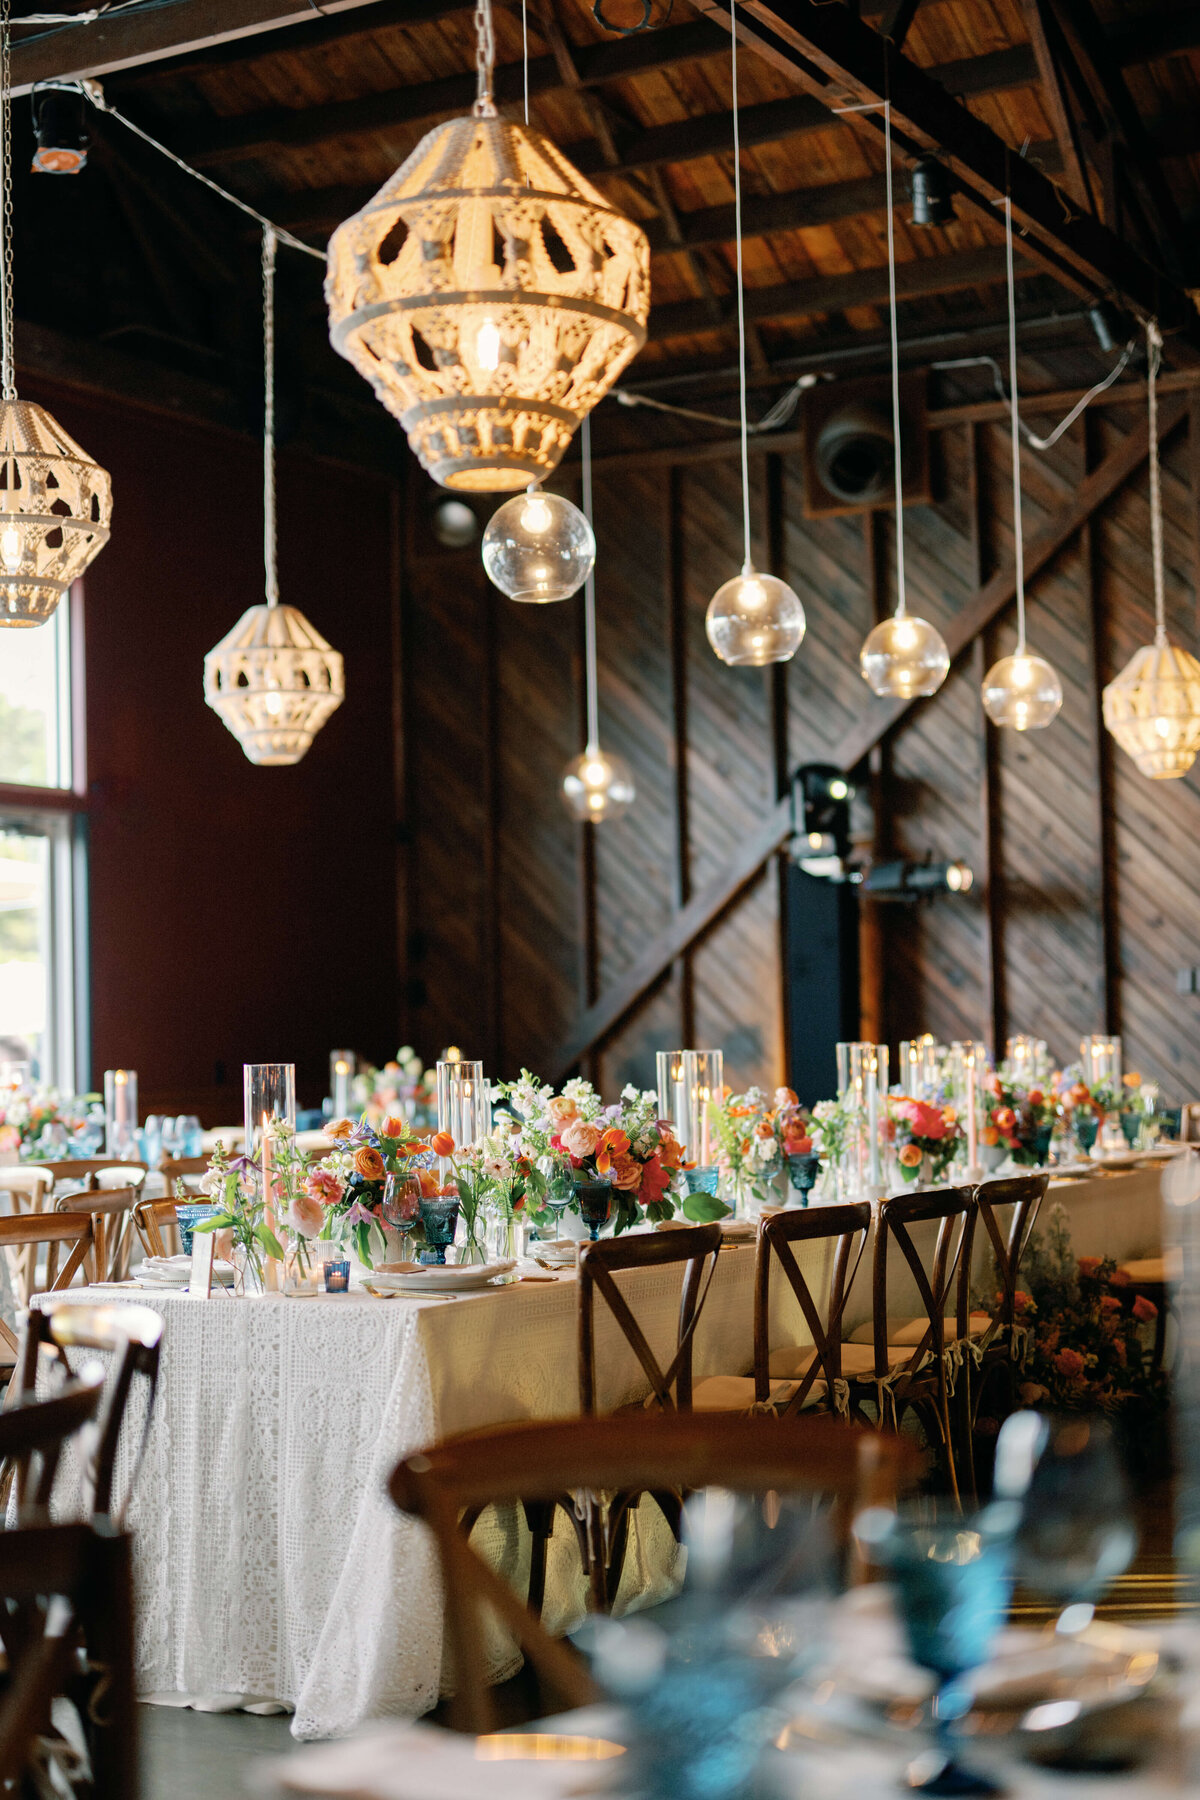 Hanging lanterns and wedding table